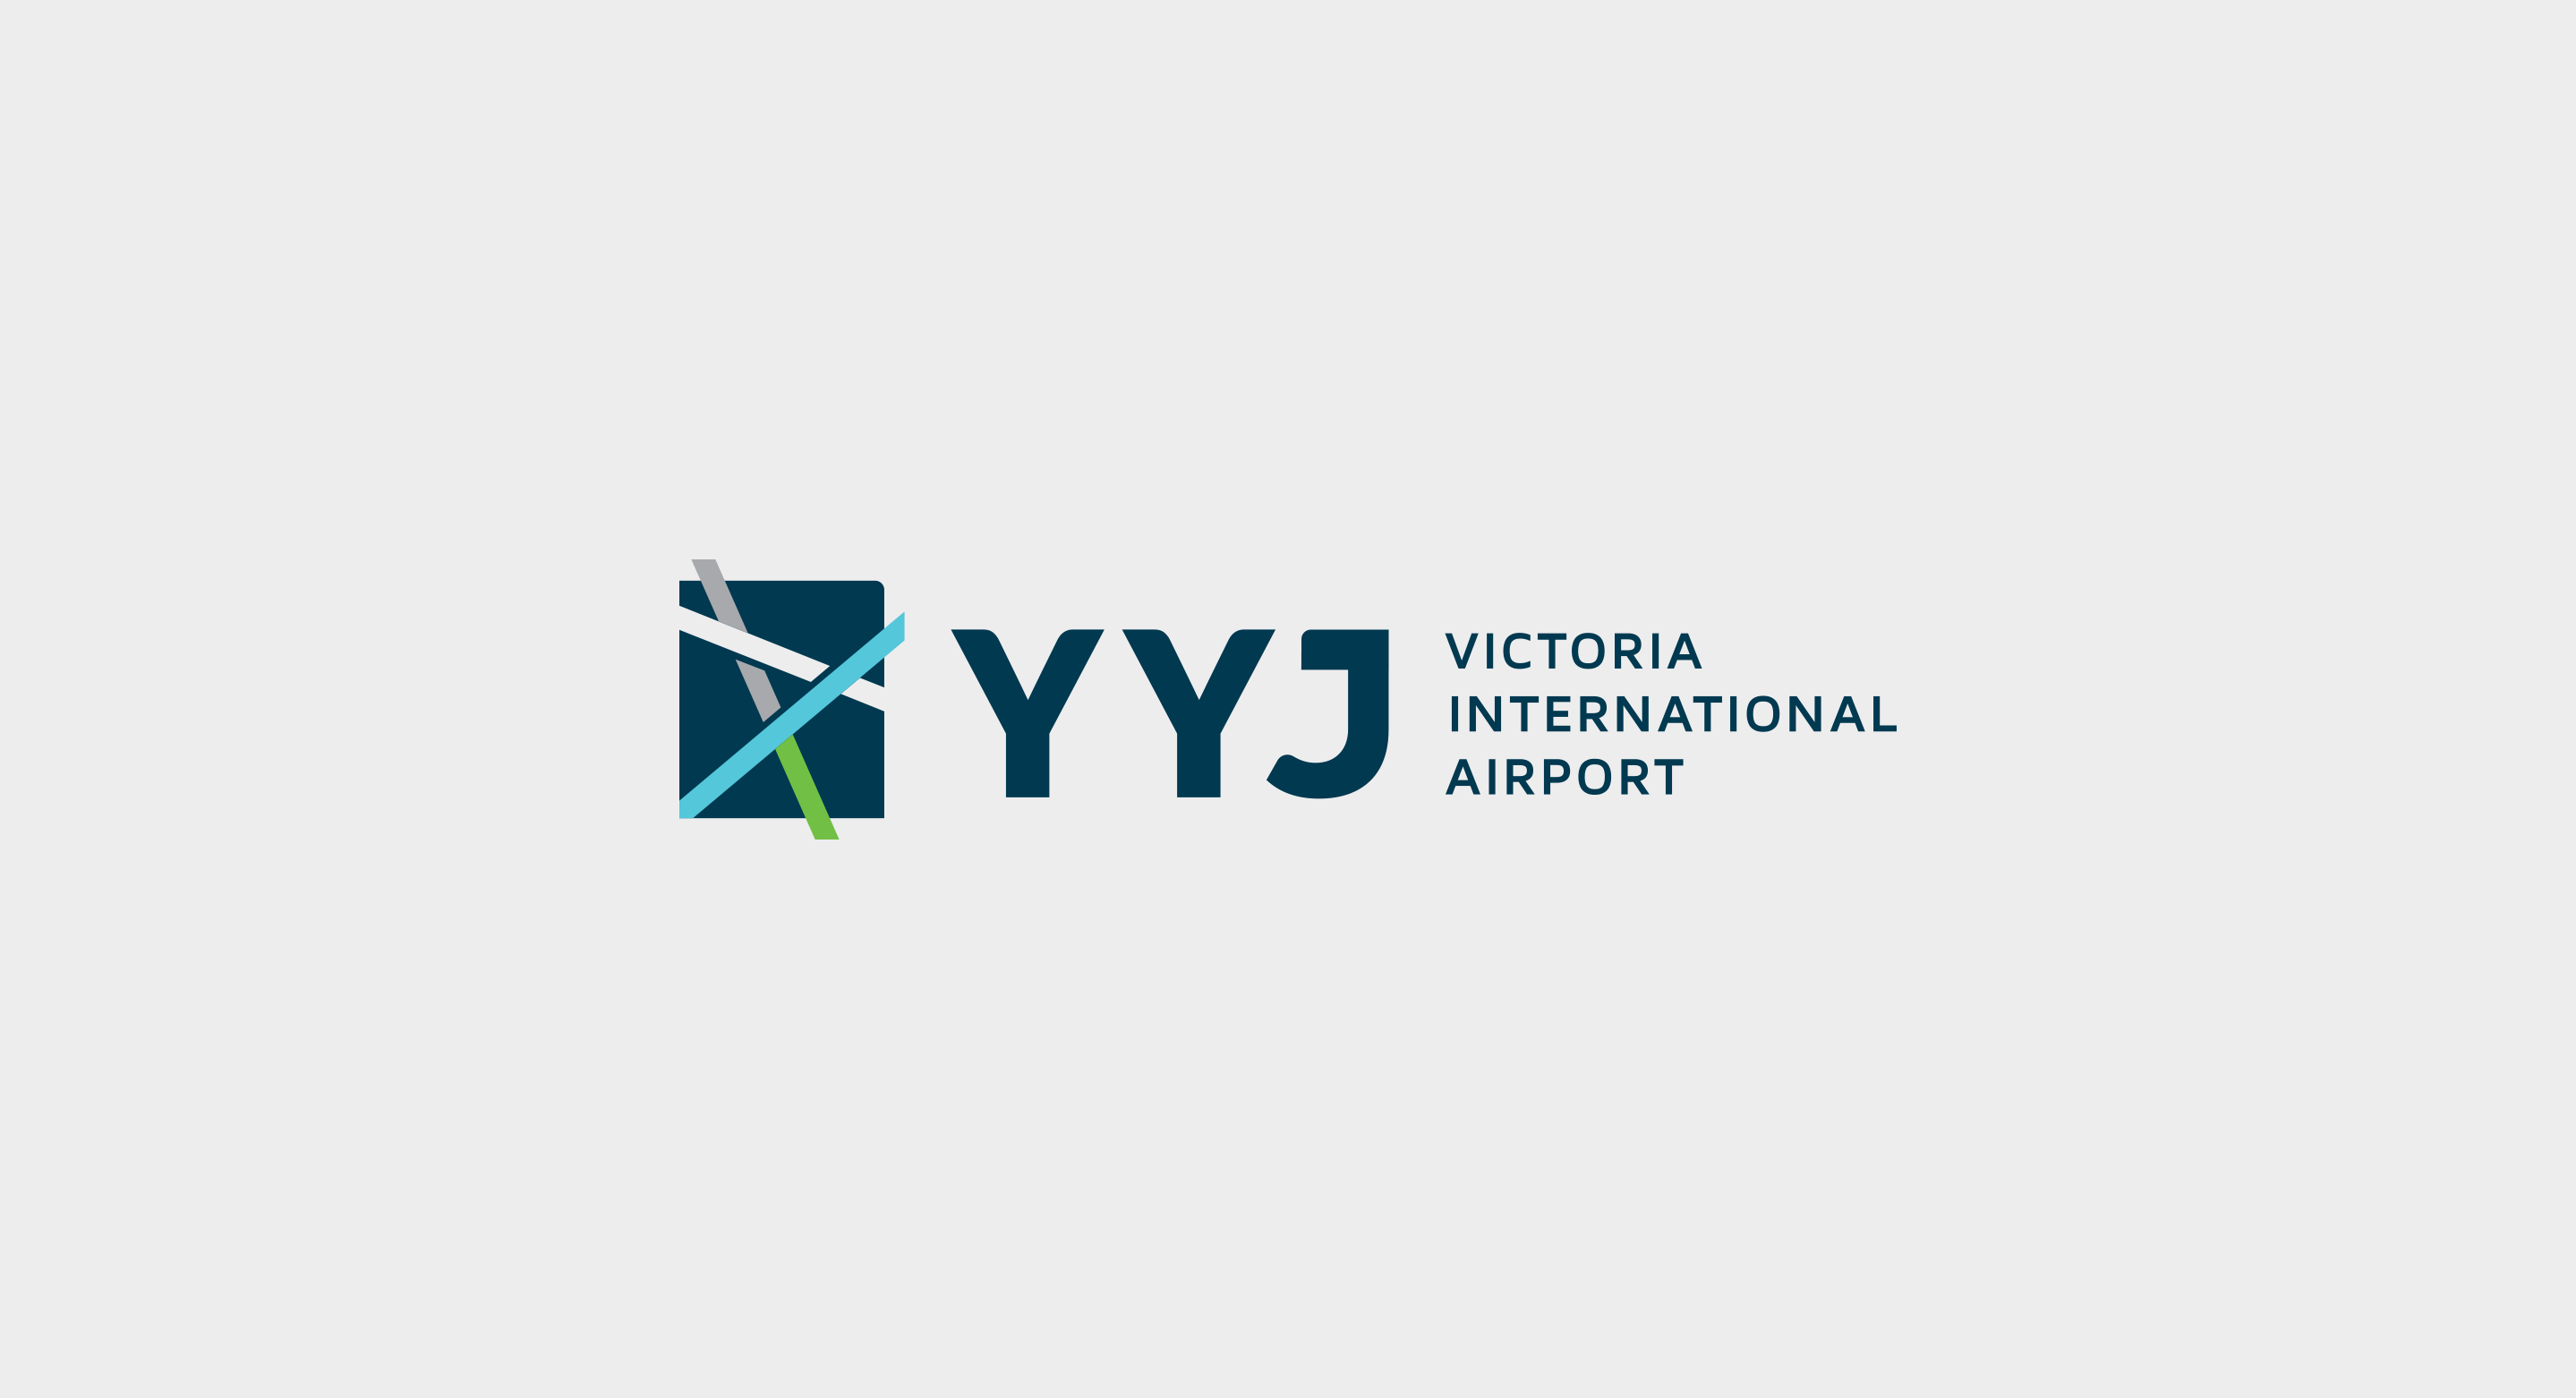 YYJ Victoria International Airport